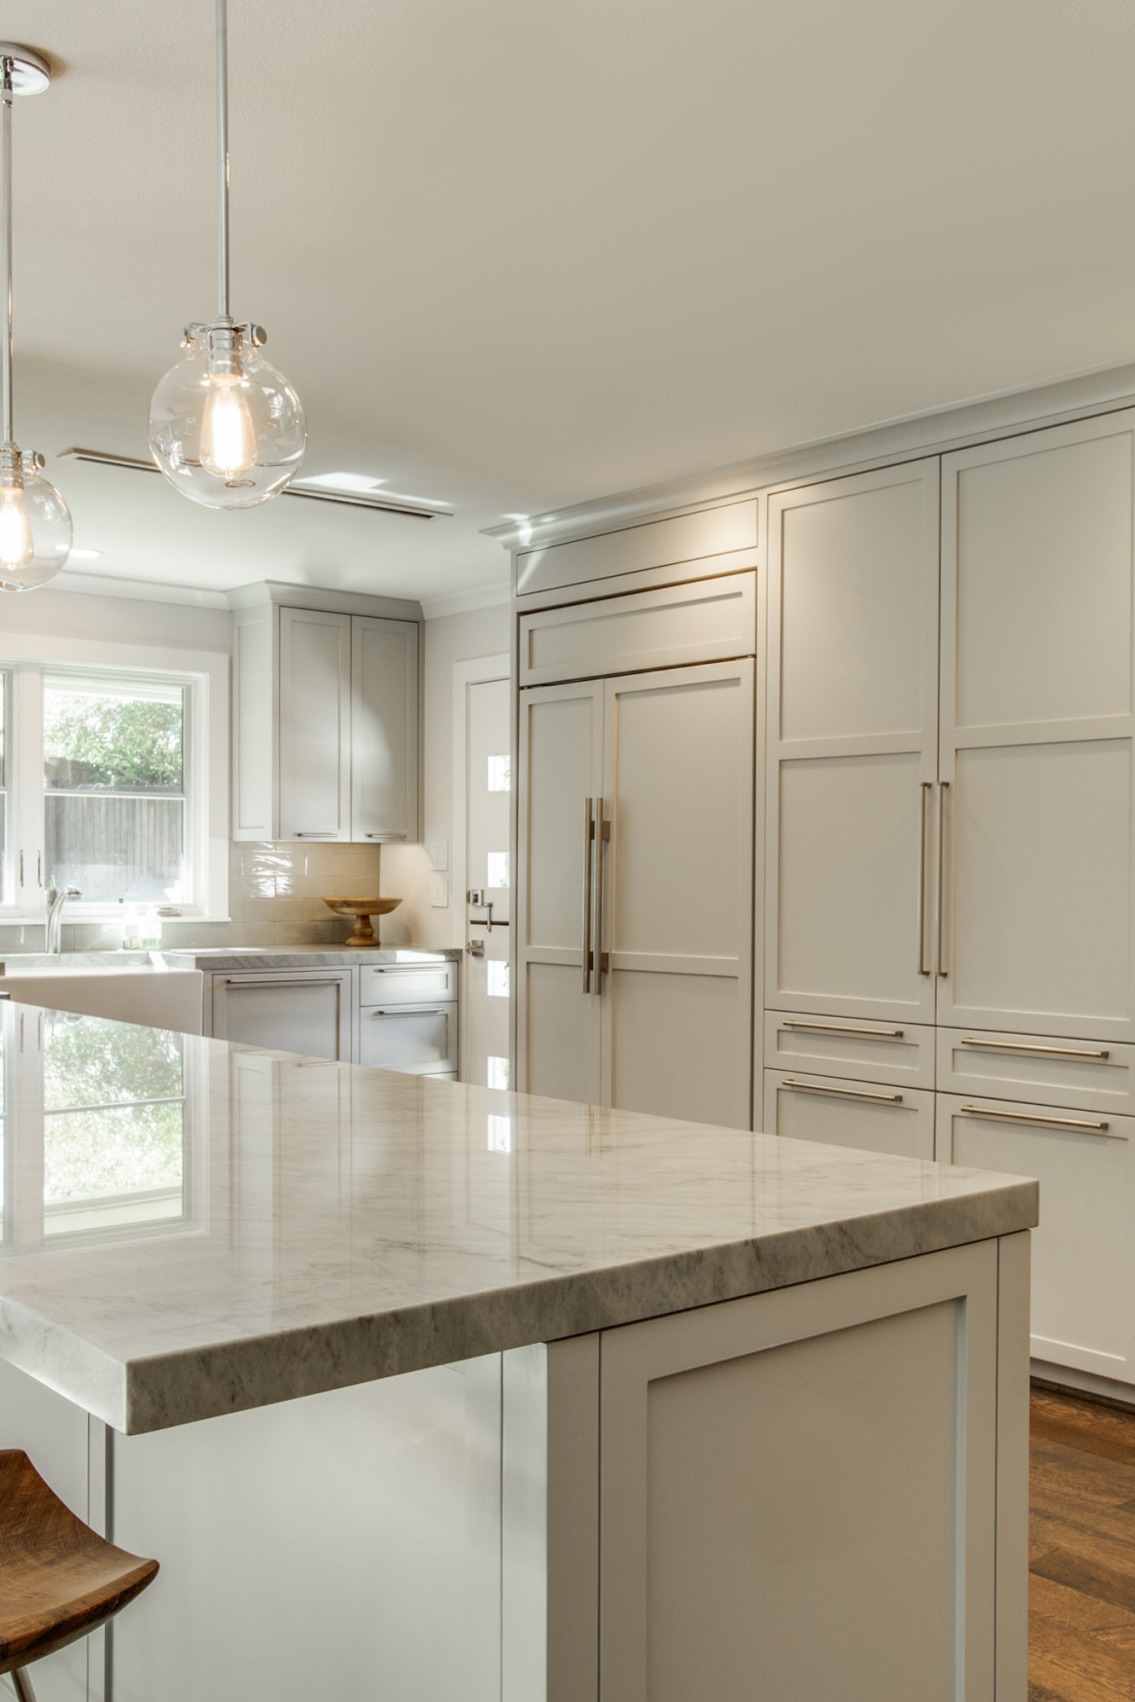 Sea Pearl Quartzite Kitchen Countertops Light Gray Cabinets White Backsplash Dark Hardwood Floor